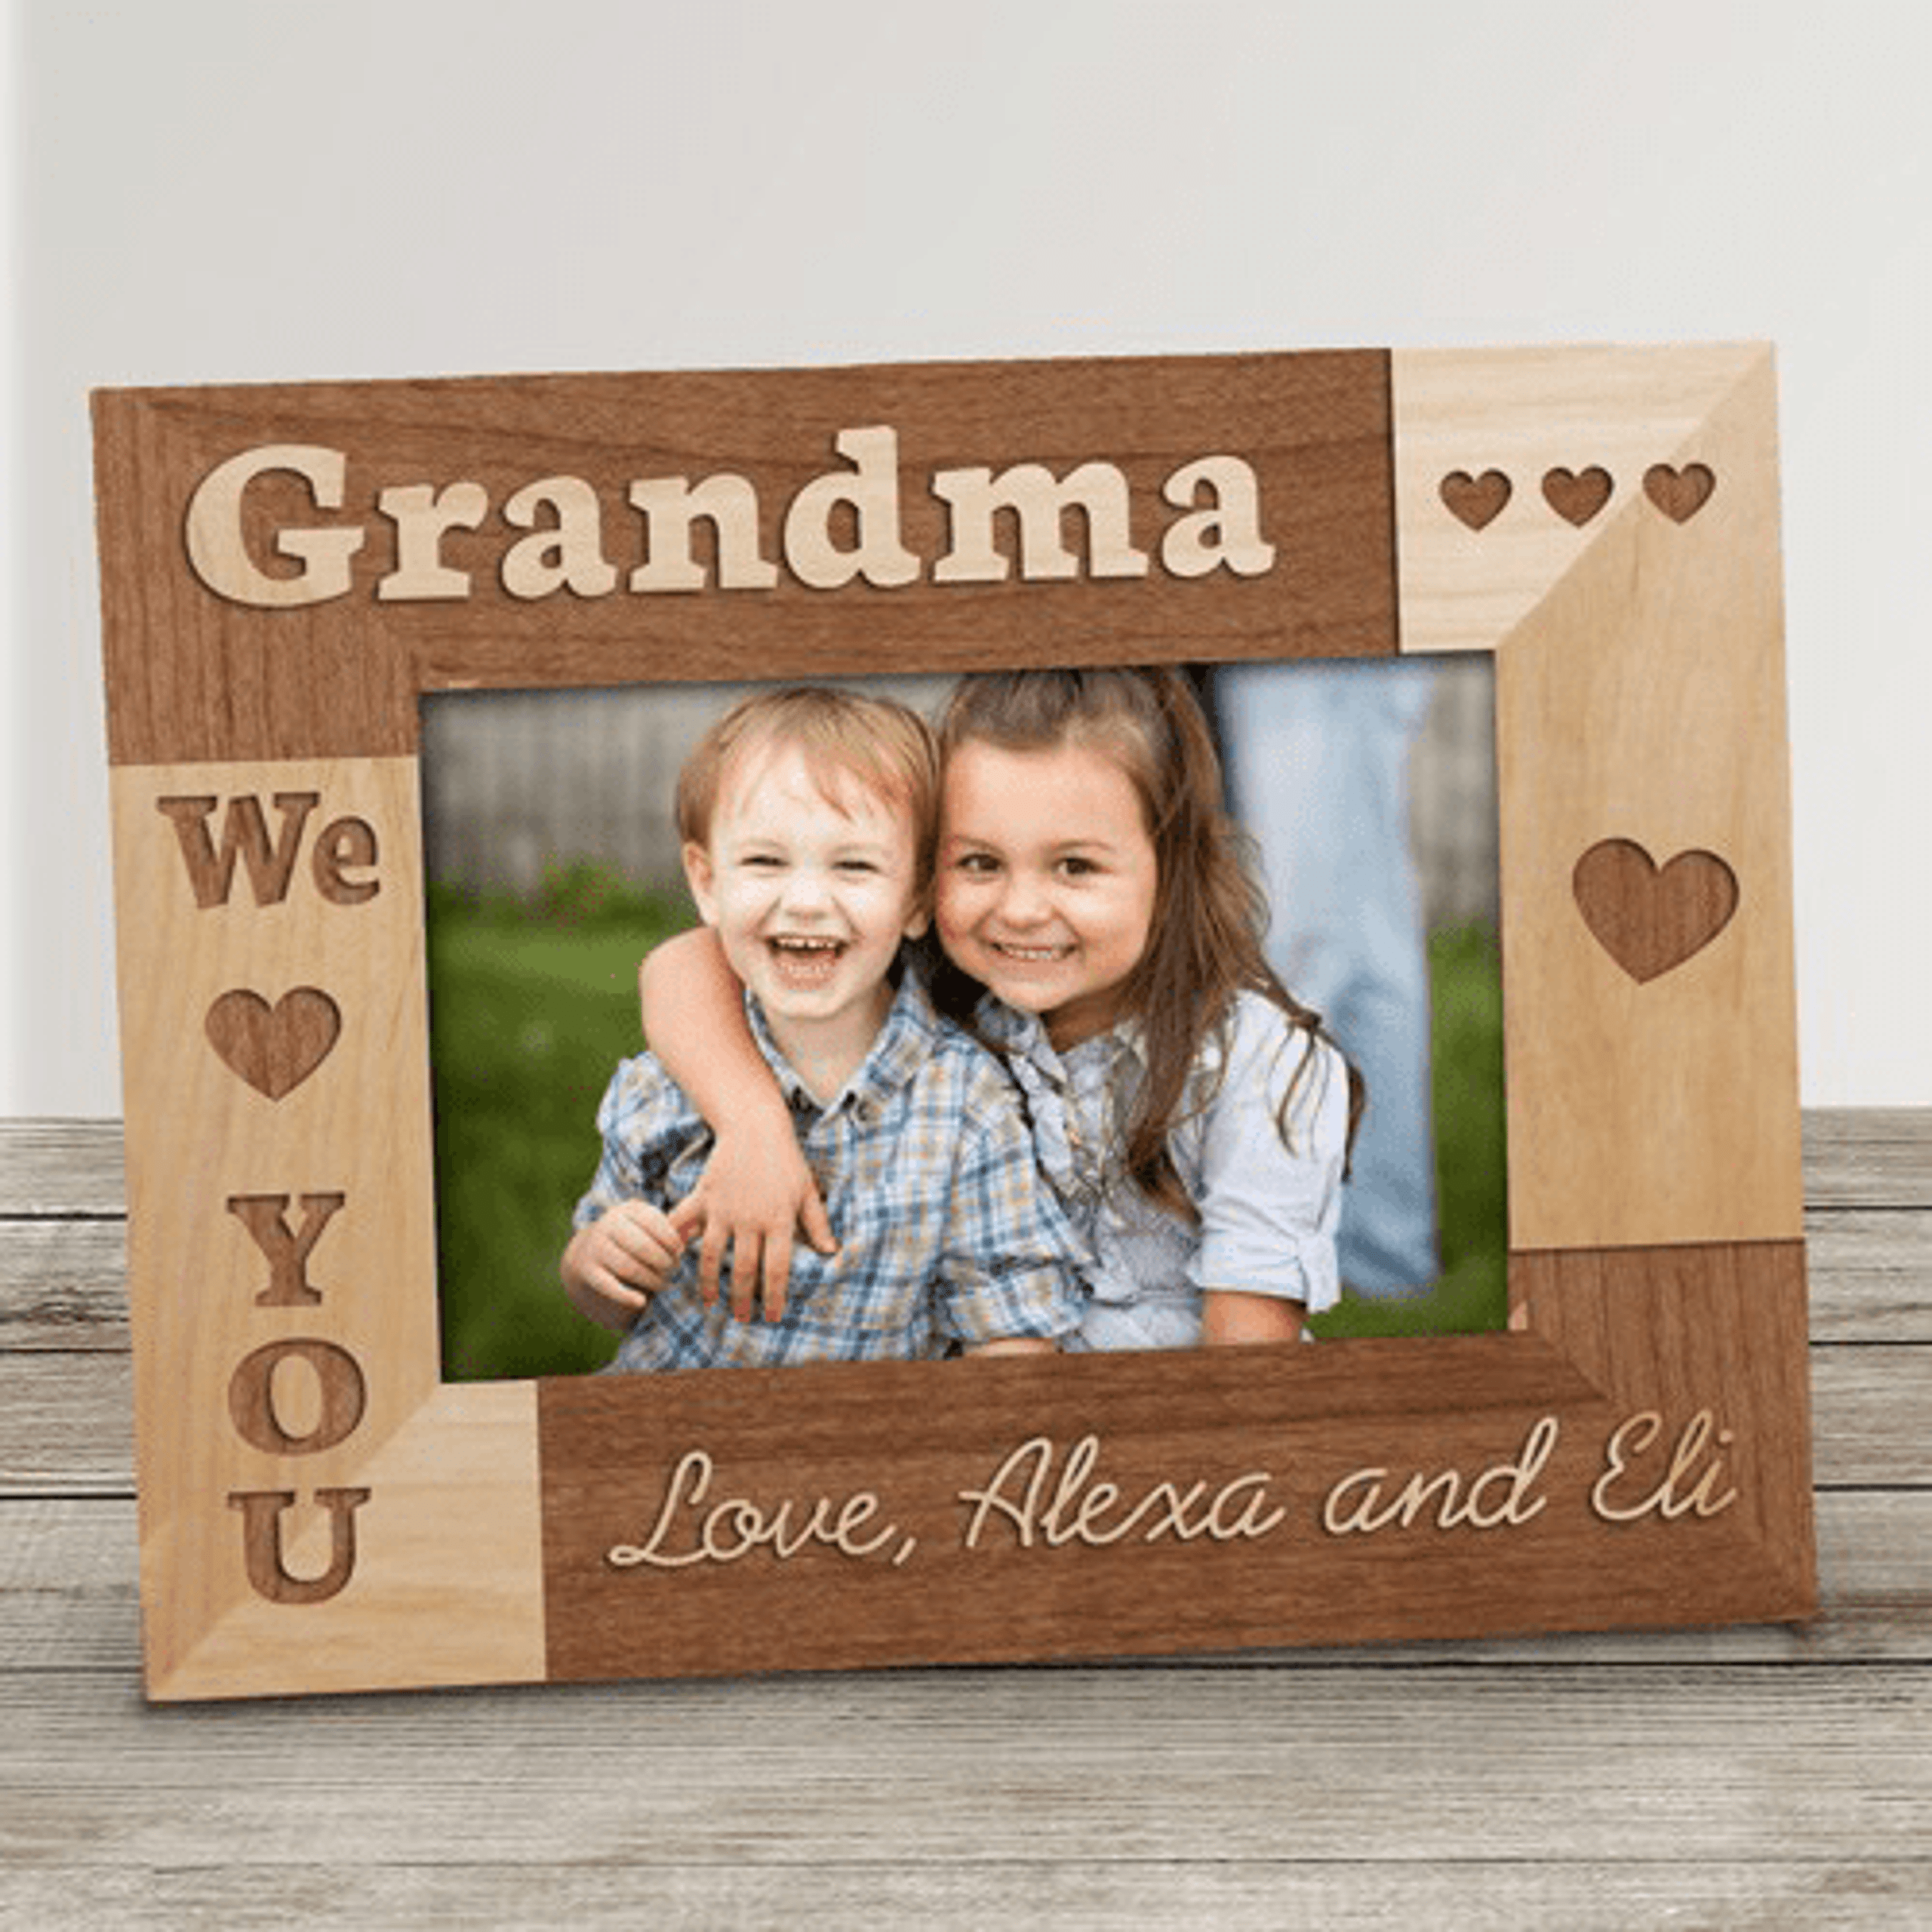 Personalized Grandma Frame - We Love You! - The BananaNana Shoppe